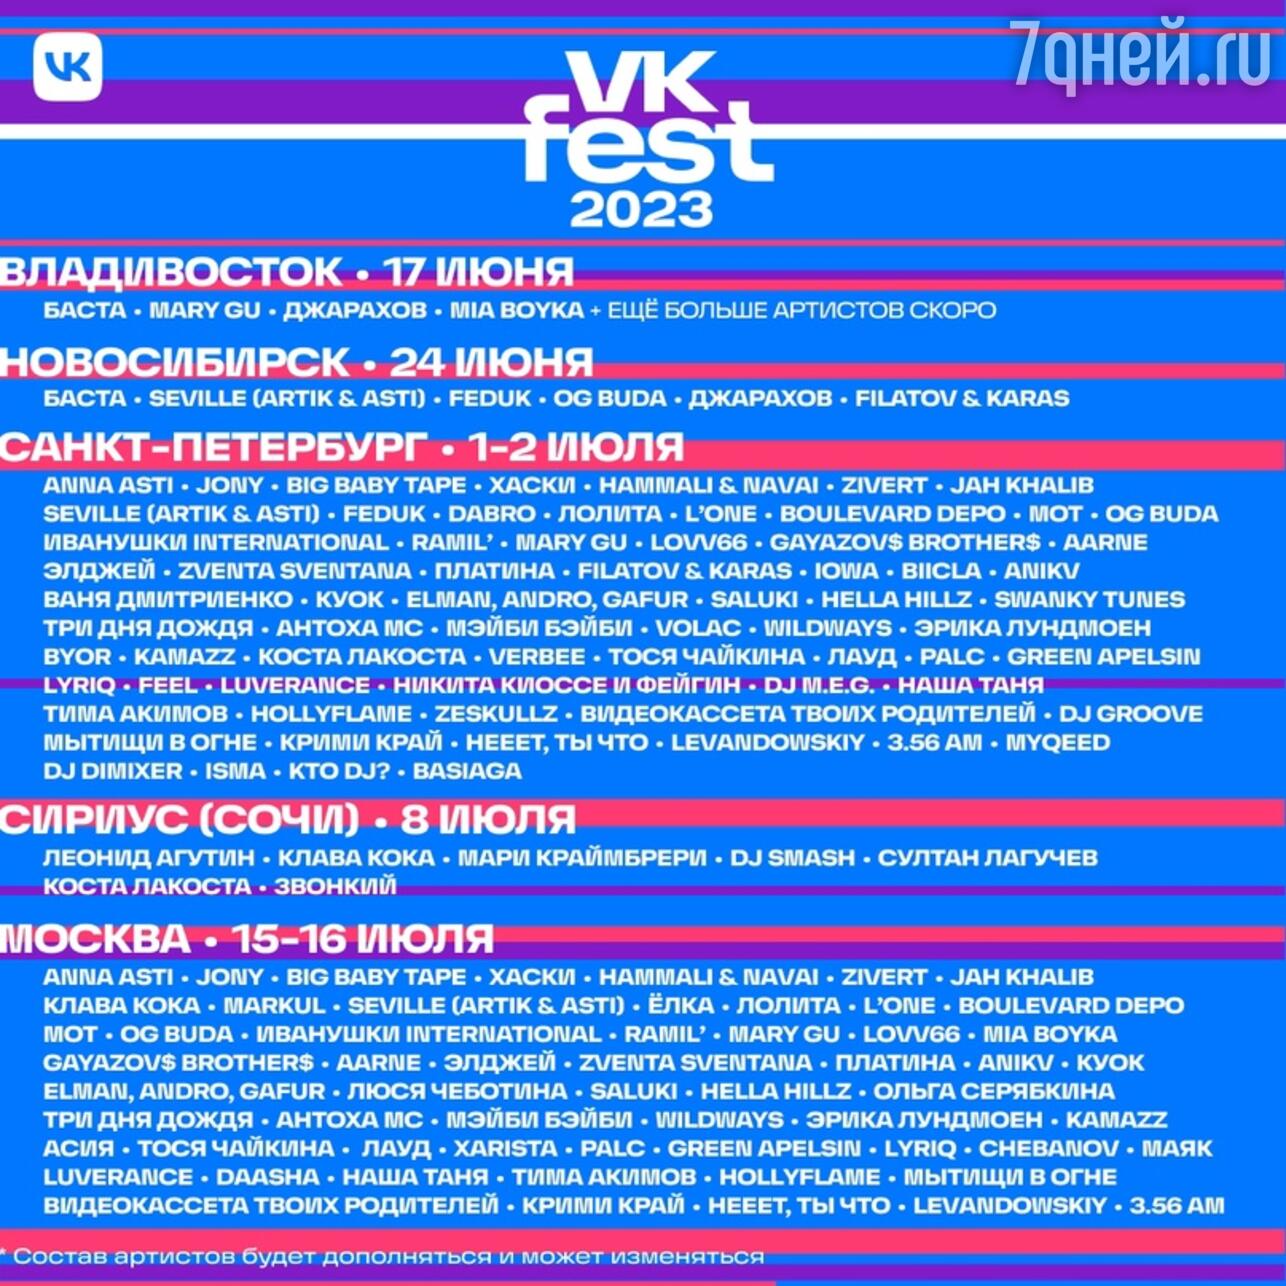 На VK Fest 2023 выступят более 80 популярных артистов - 7Дней.ру